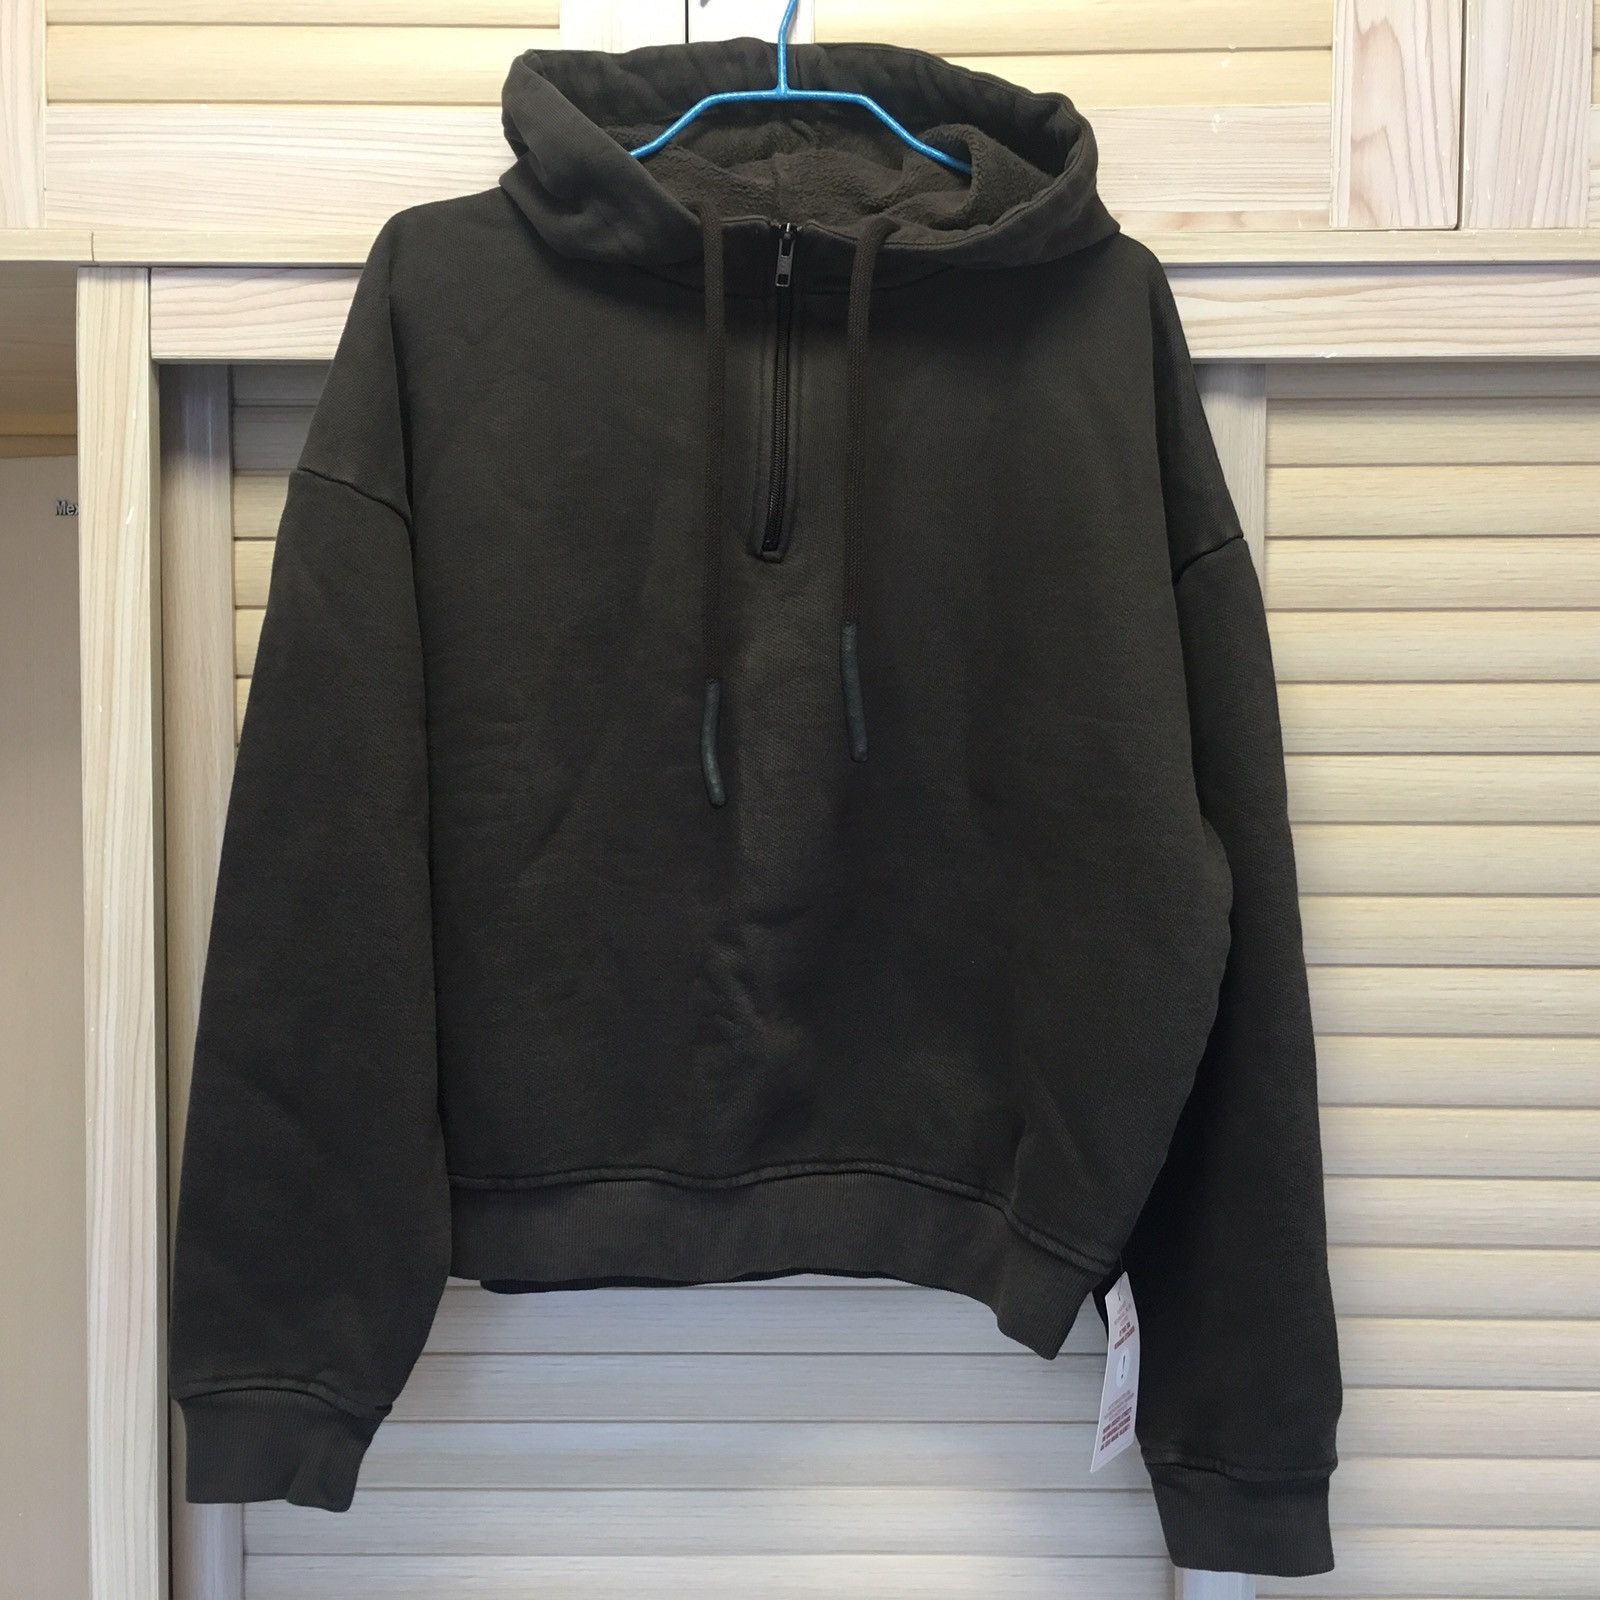 Adidas Yeezy season 1 hoodie Size US S / EU 44-46 / 1 - 1 Preview